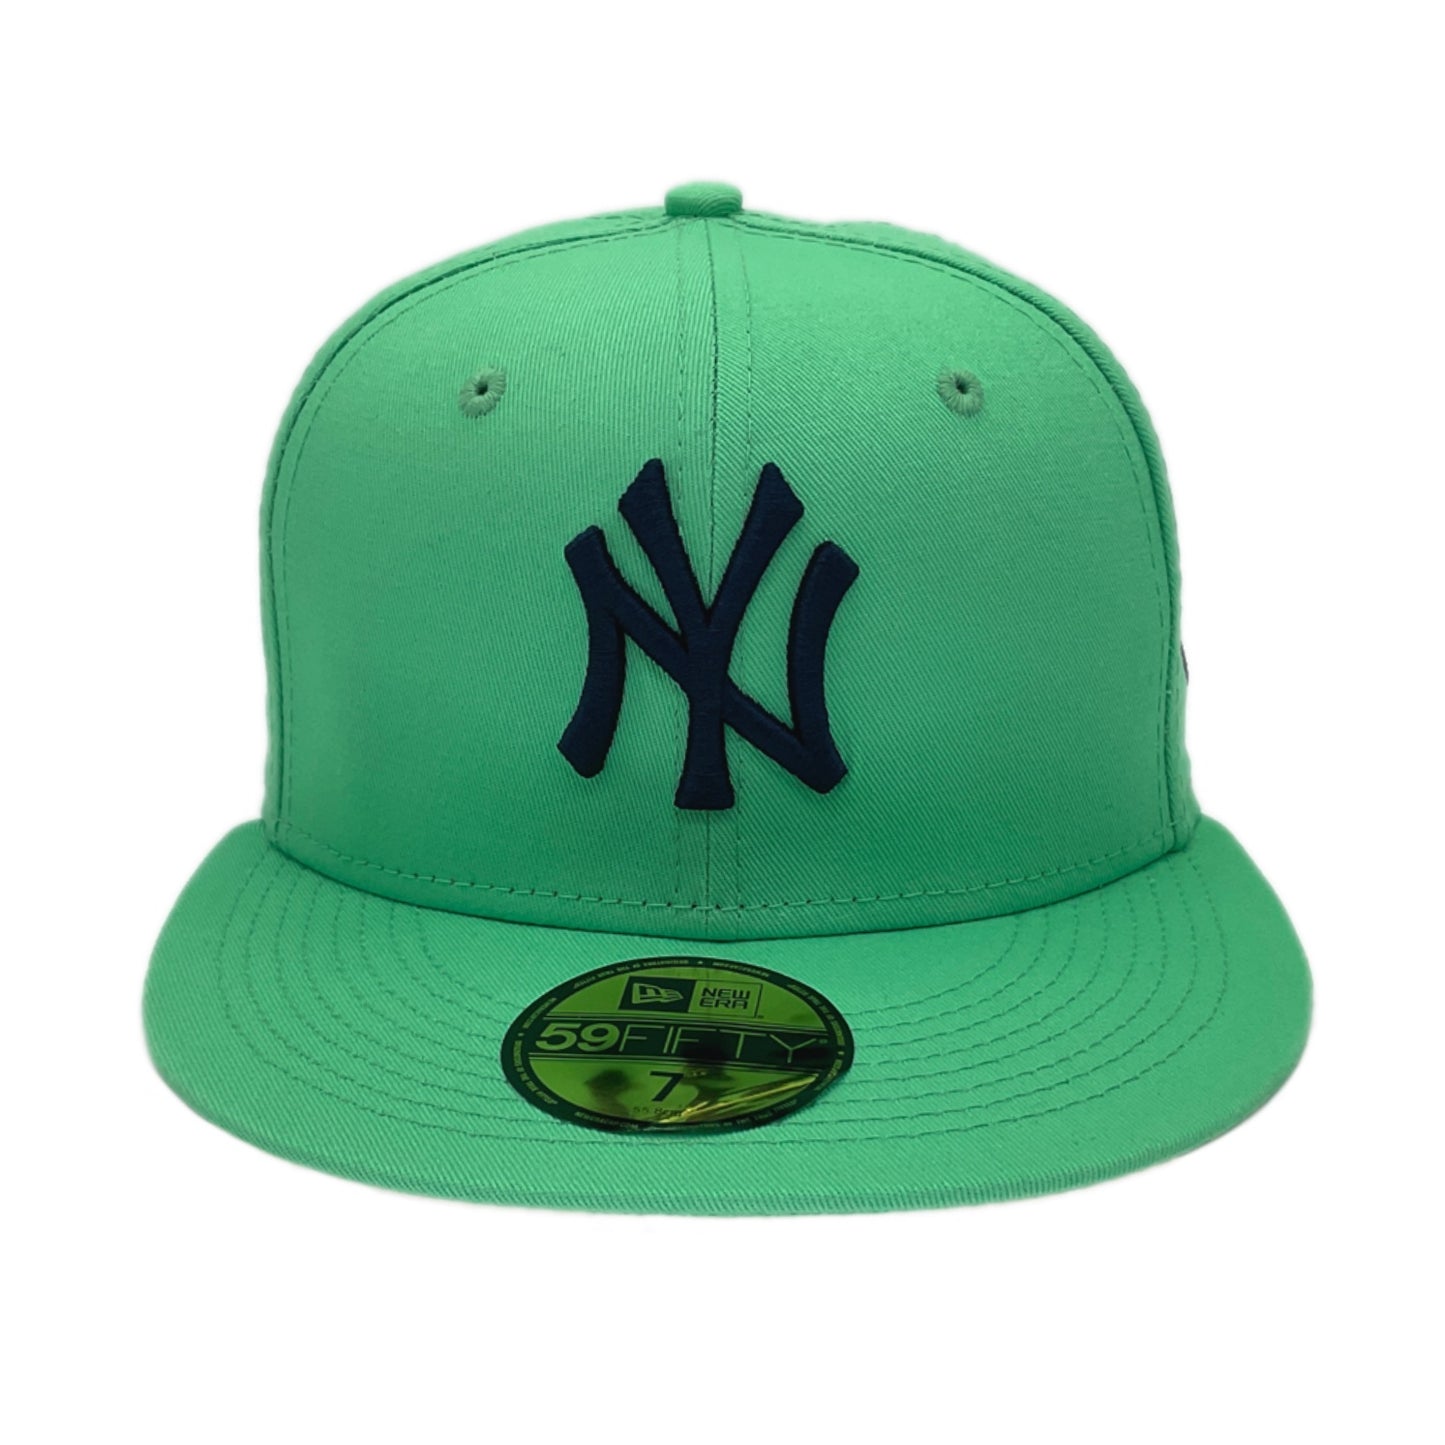 New York Yankees New Era Cap Mint